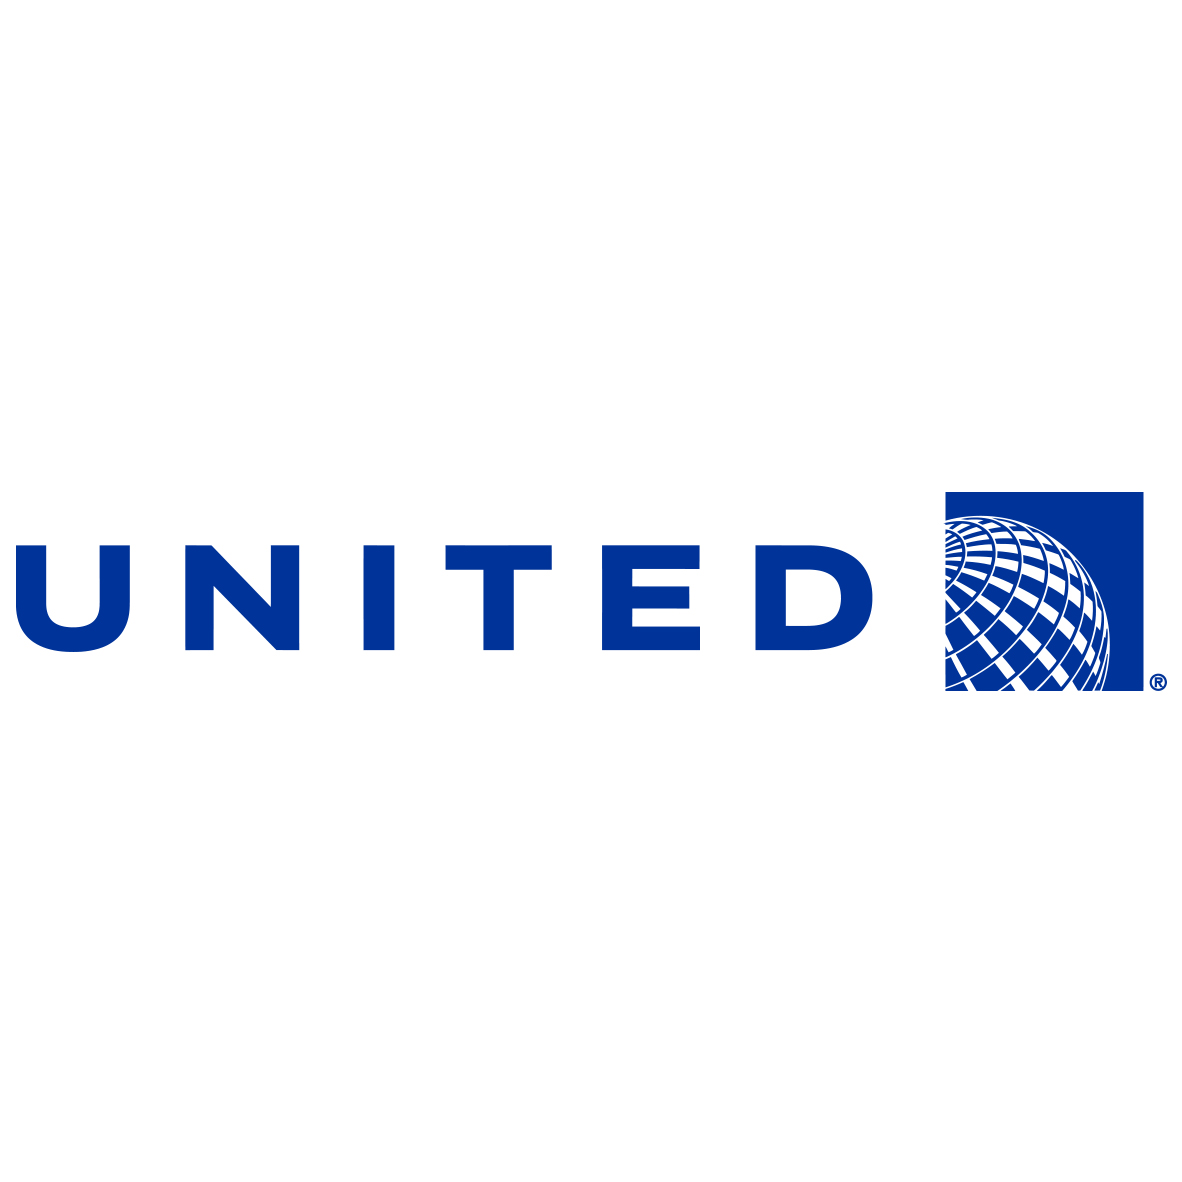 United_logo.jpg